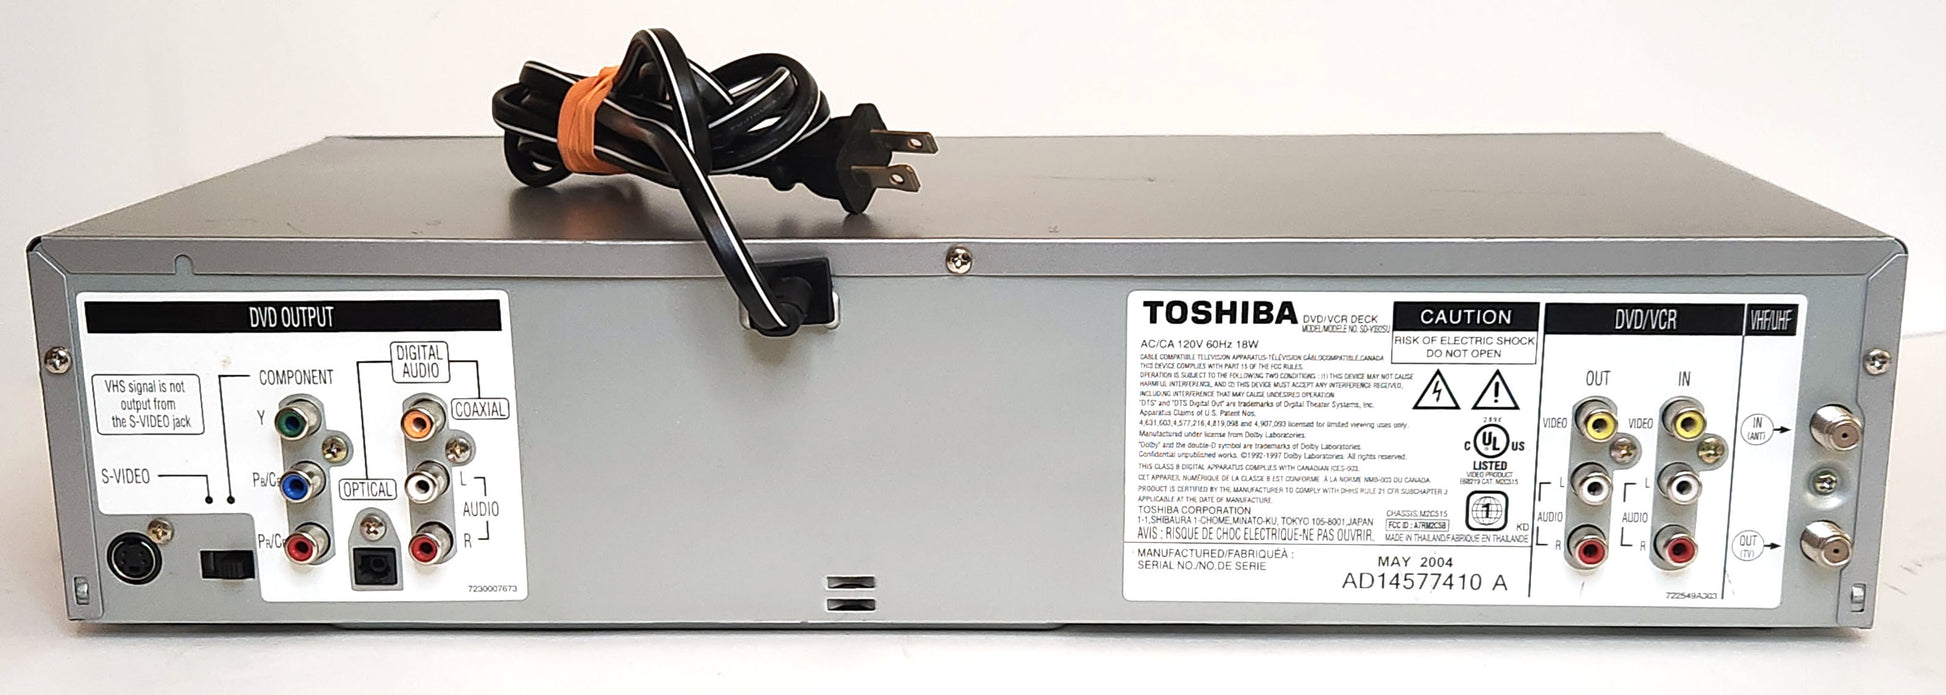 Toshiba SD-V392SU VCR/DVD Player Combo - Rear